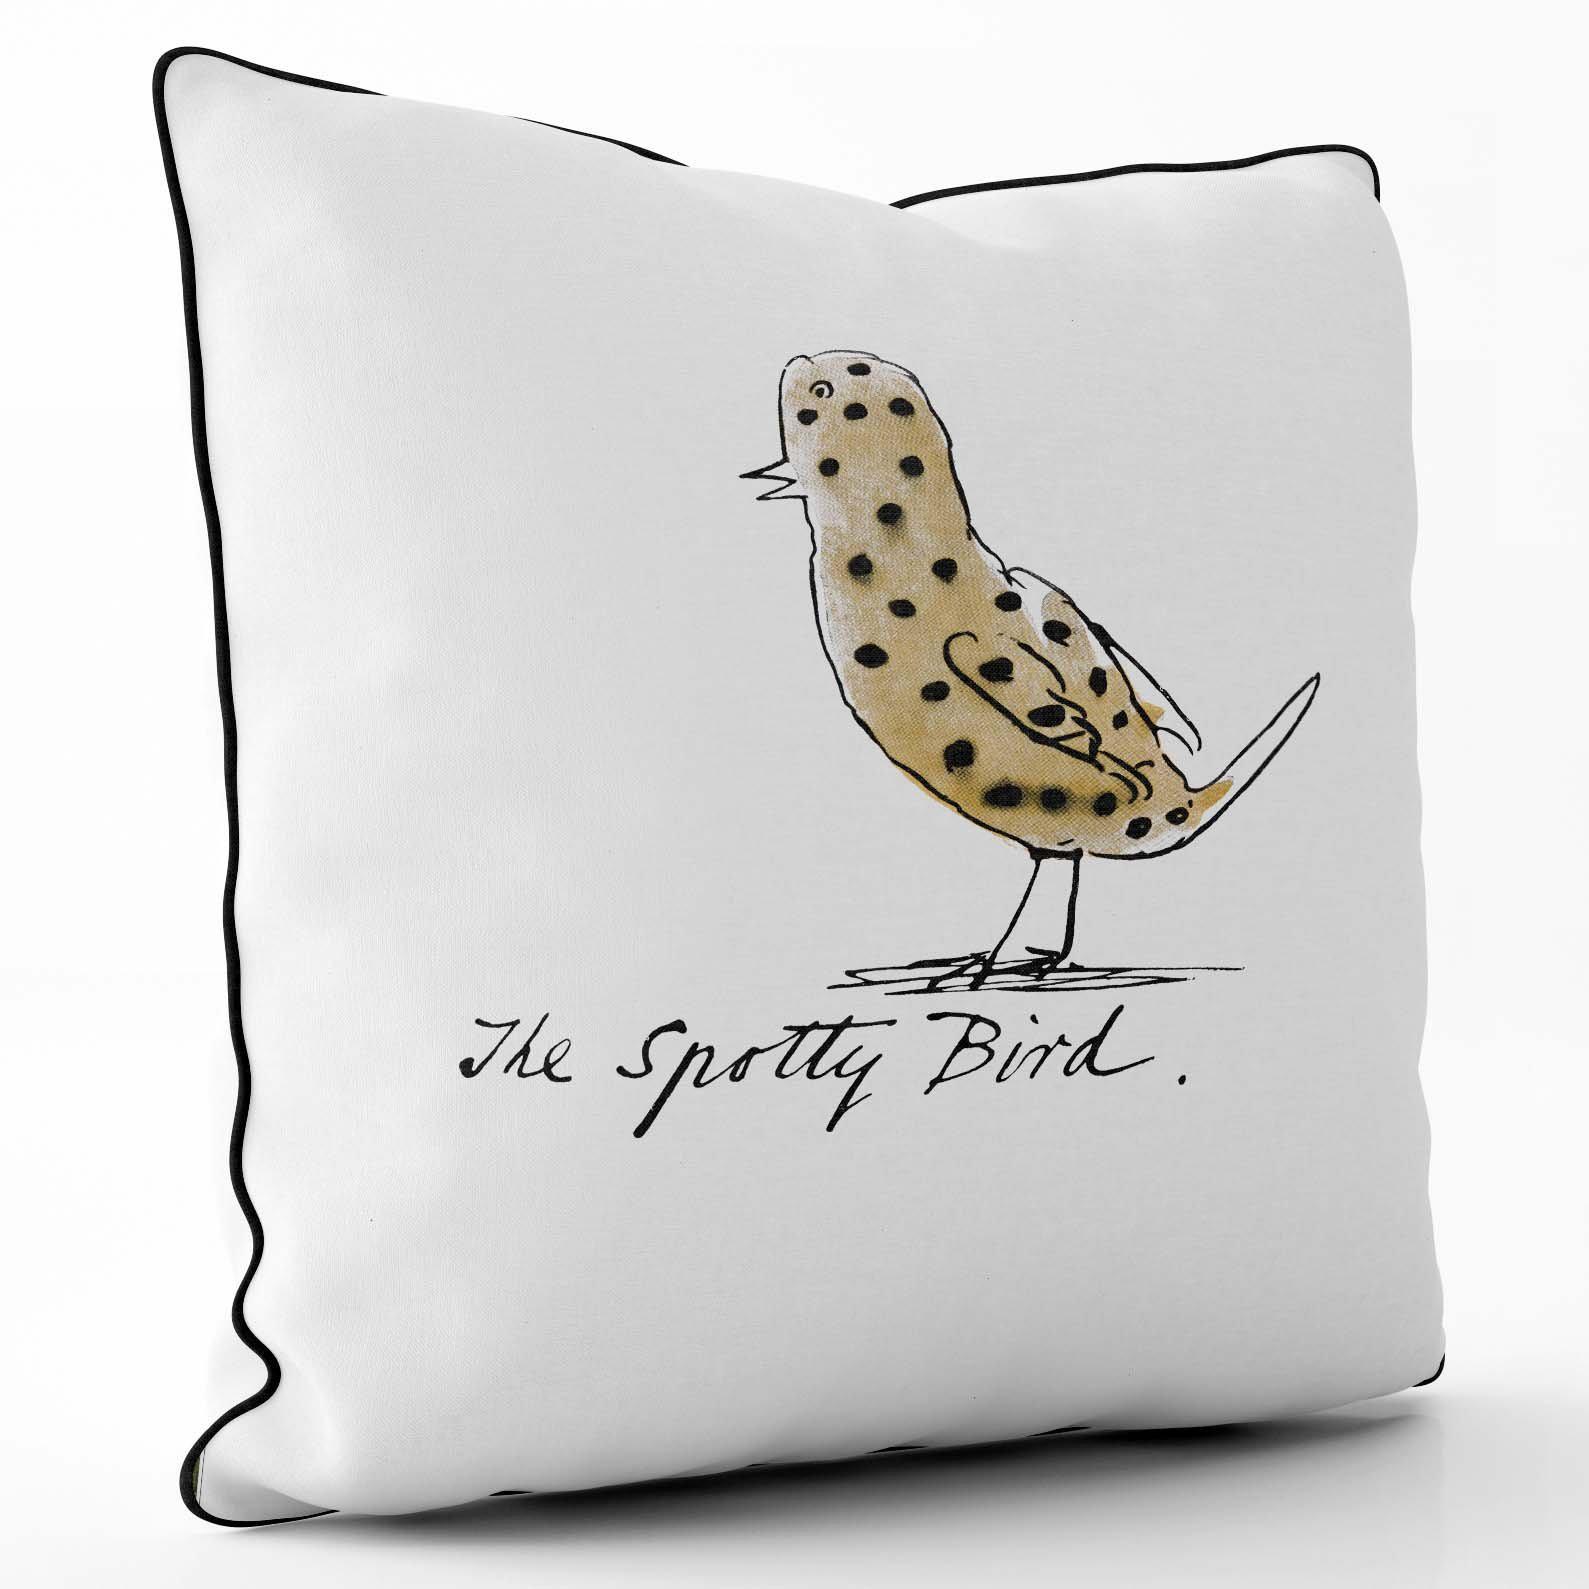 The Spotty Bird - Edward Lear Cushion - Coffee Piping - Handmade Cushions UK - WeLoveCushions